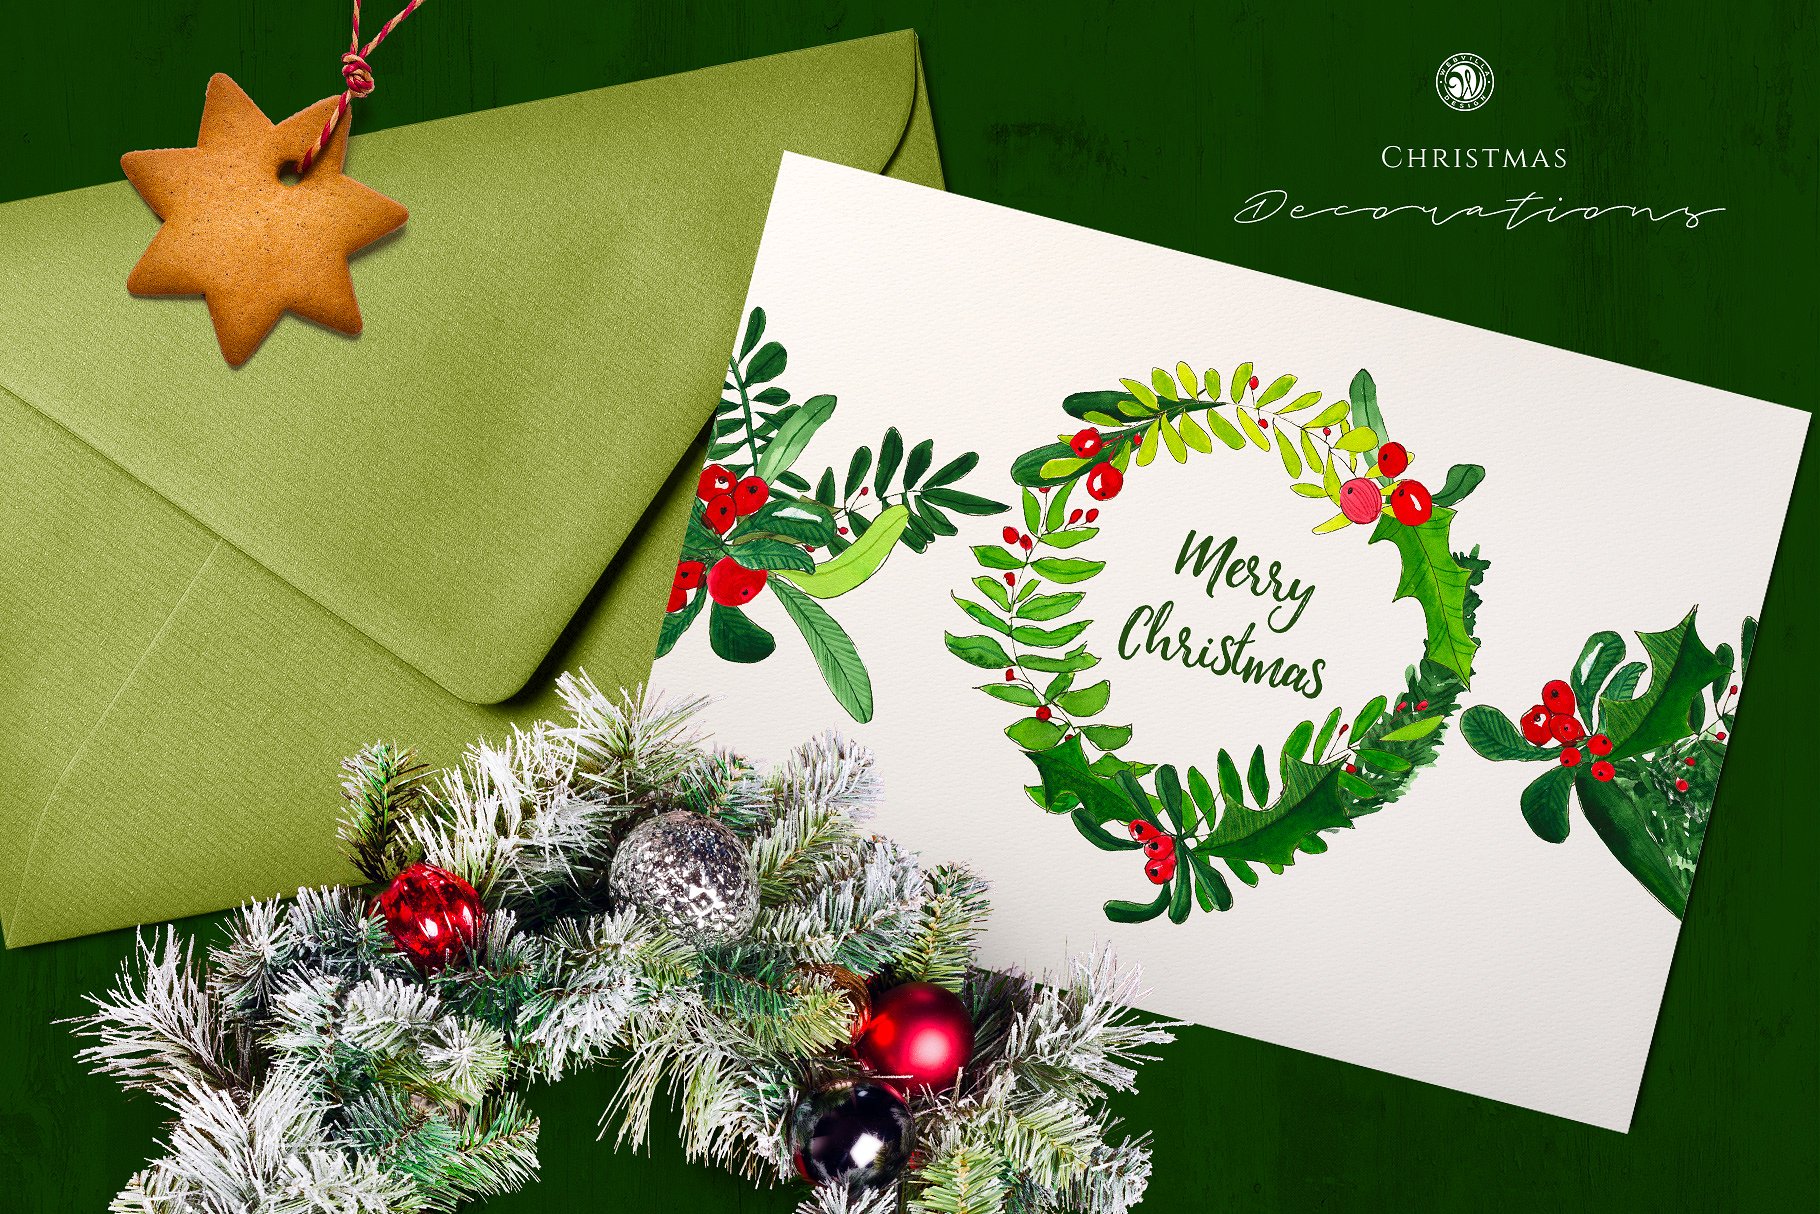 绿色水彩圣诞花卉装饰剪贴画合集 Watercolor Christmas Decorations插图(1)